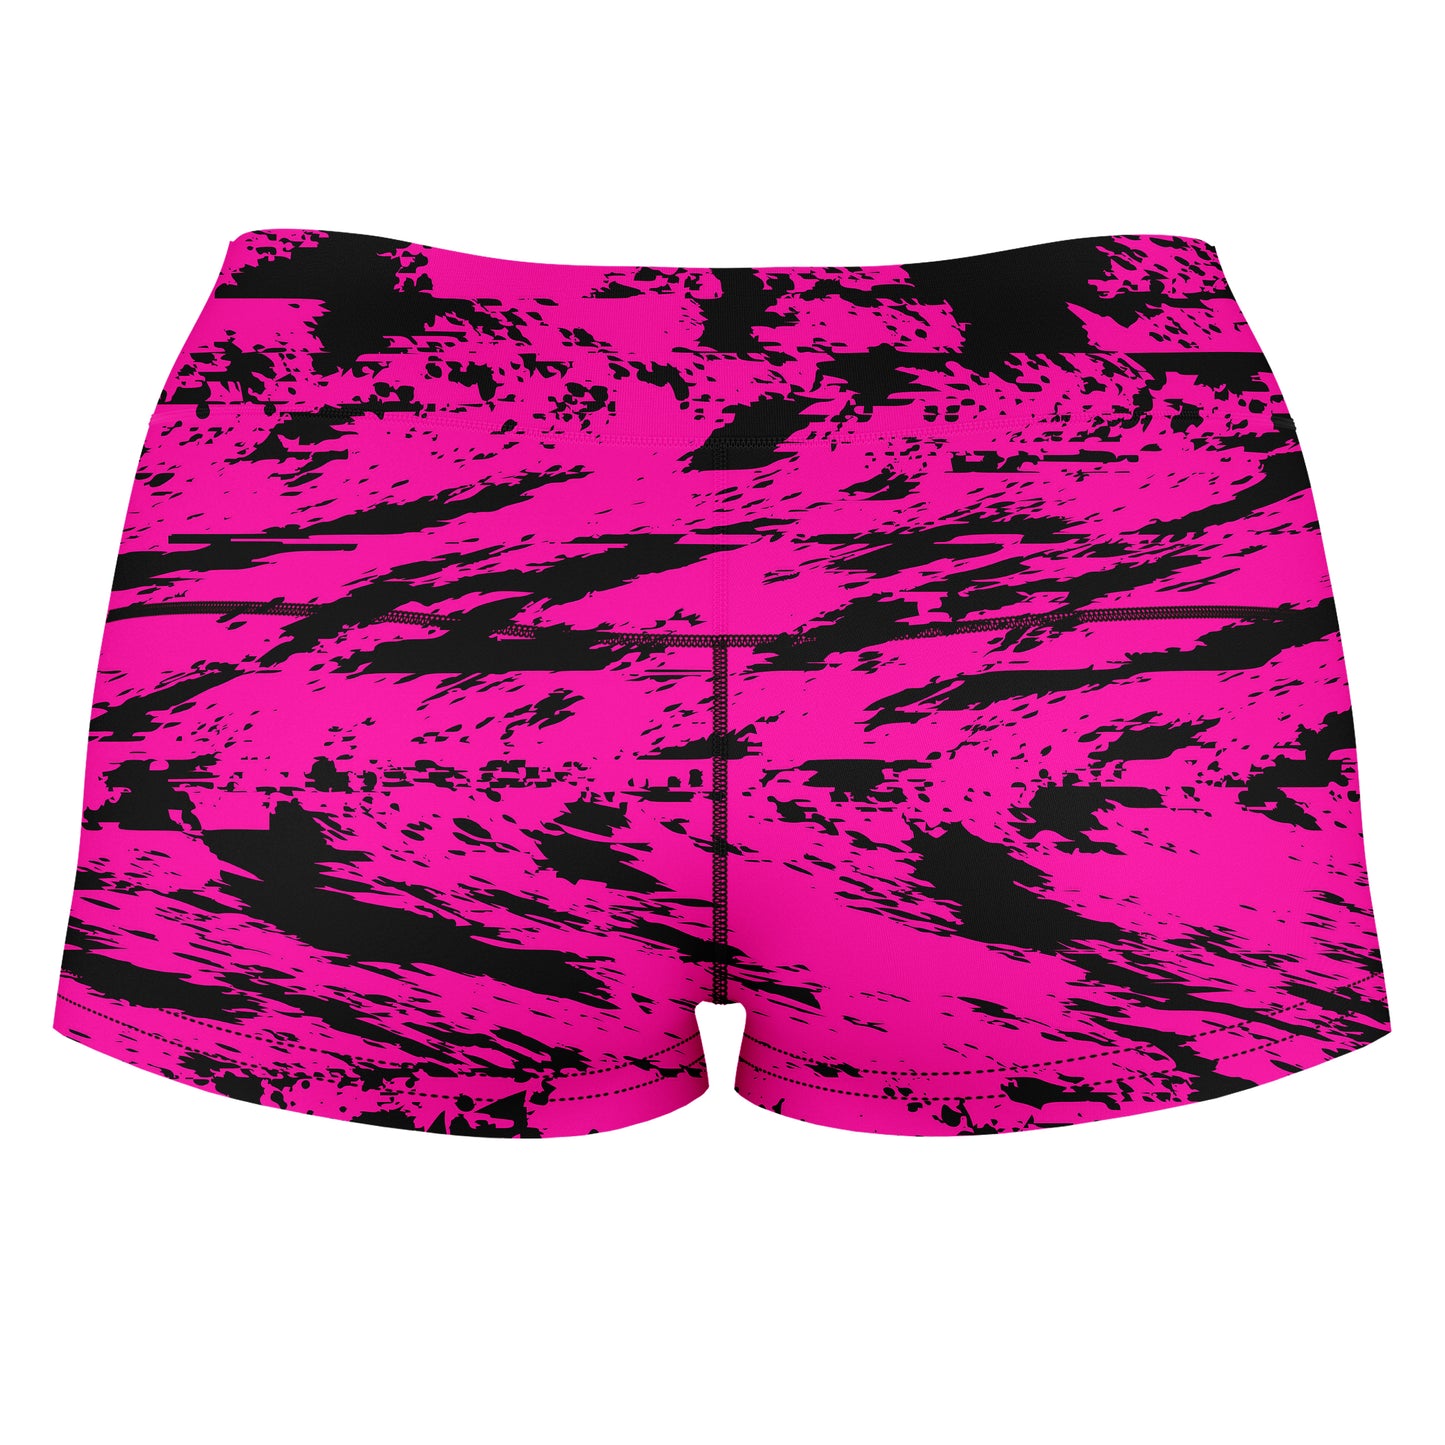 Pink and Black Rave Glitch Splatter High-Waisted Women's Shorts, Big Tex Funkadelic, | iEDM